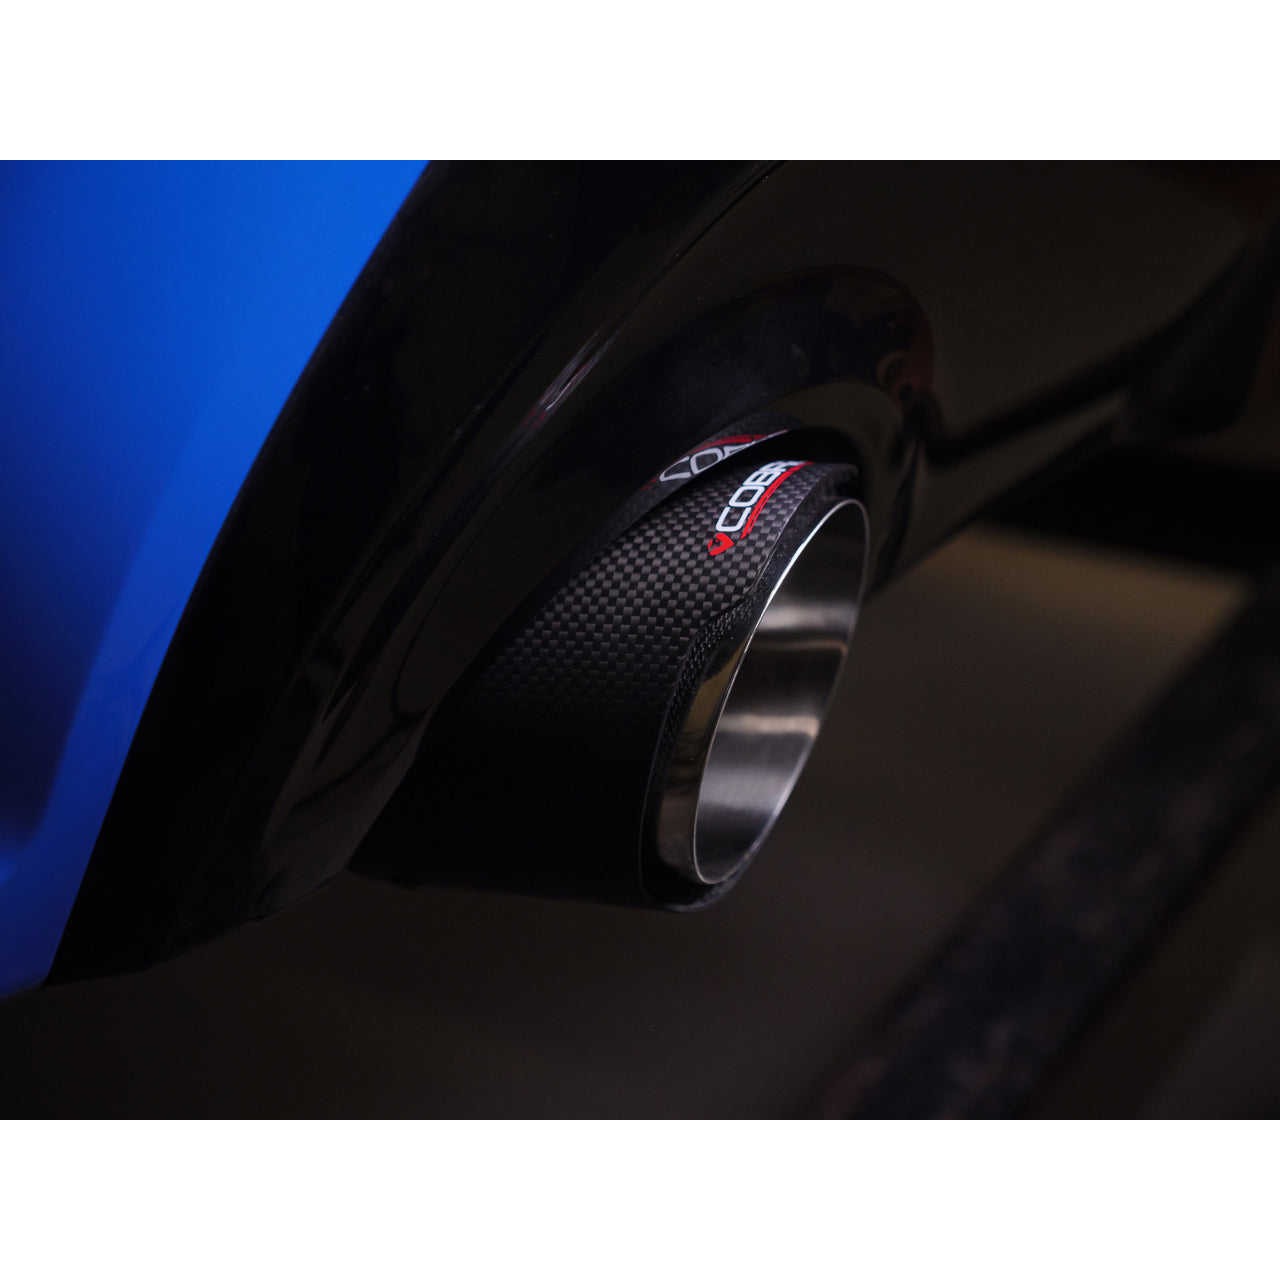 BMW M135i (F40) Venom Turbo Back Box Delete Race Performance Exhaust - Wayside Performance 